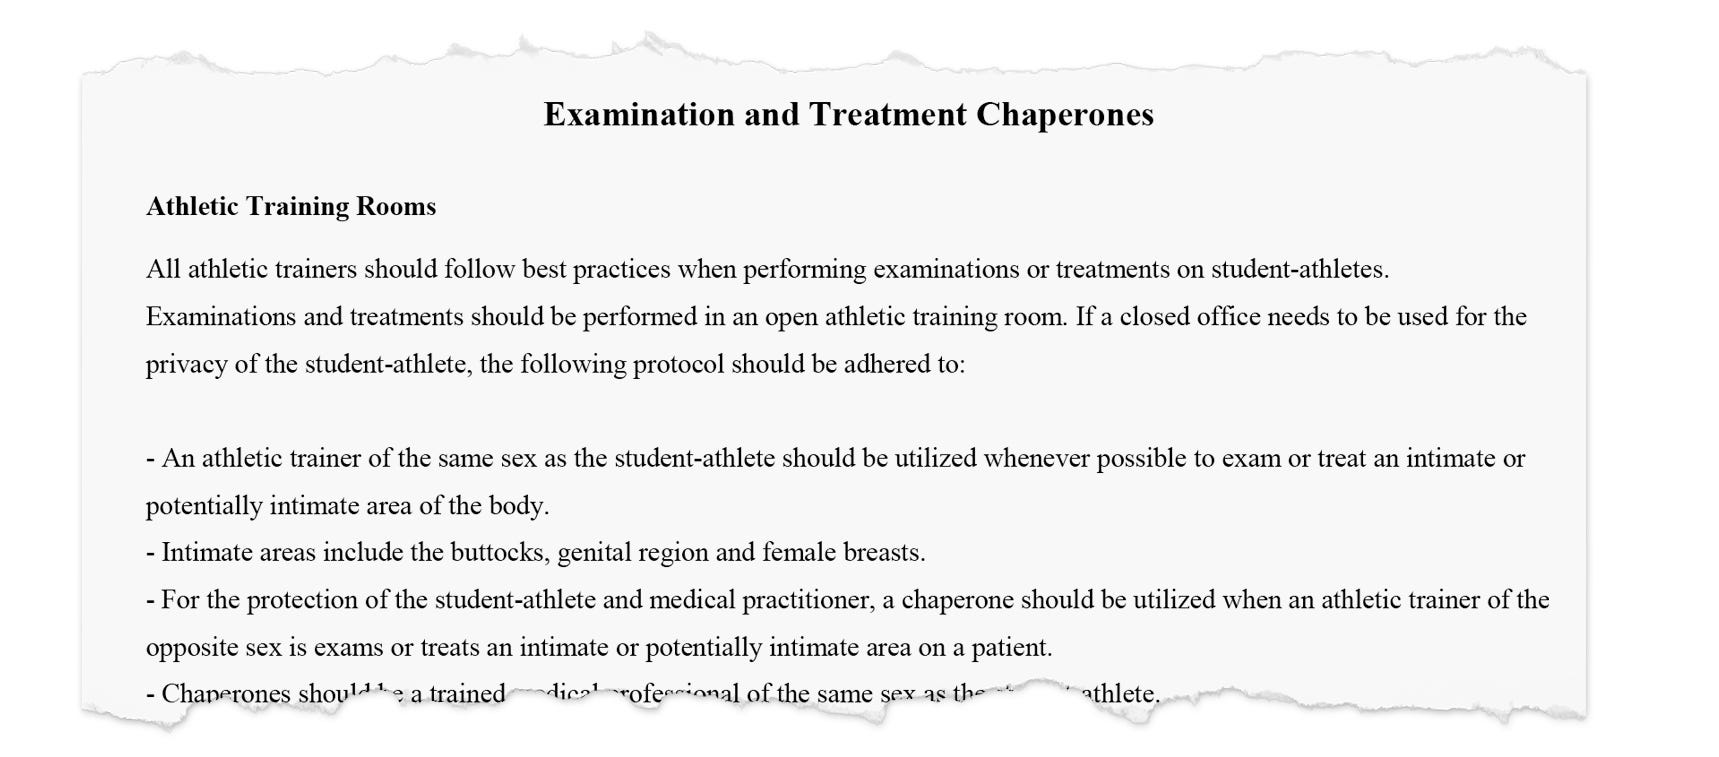 San Jose State University's current sports medicine policy